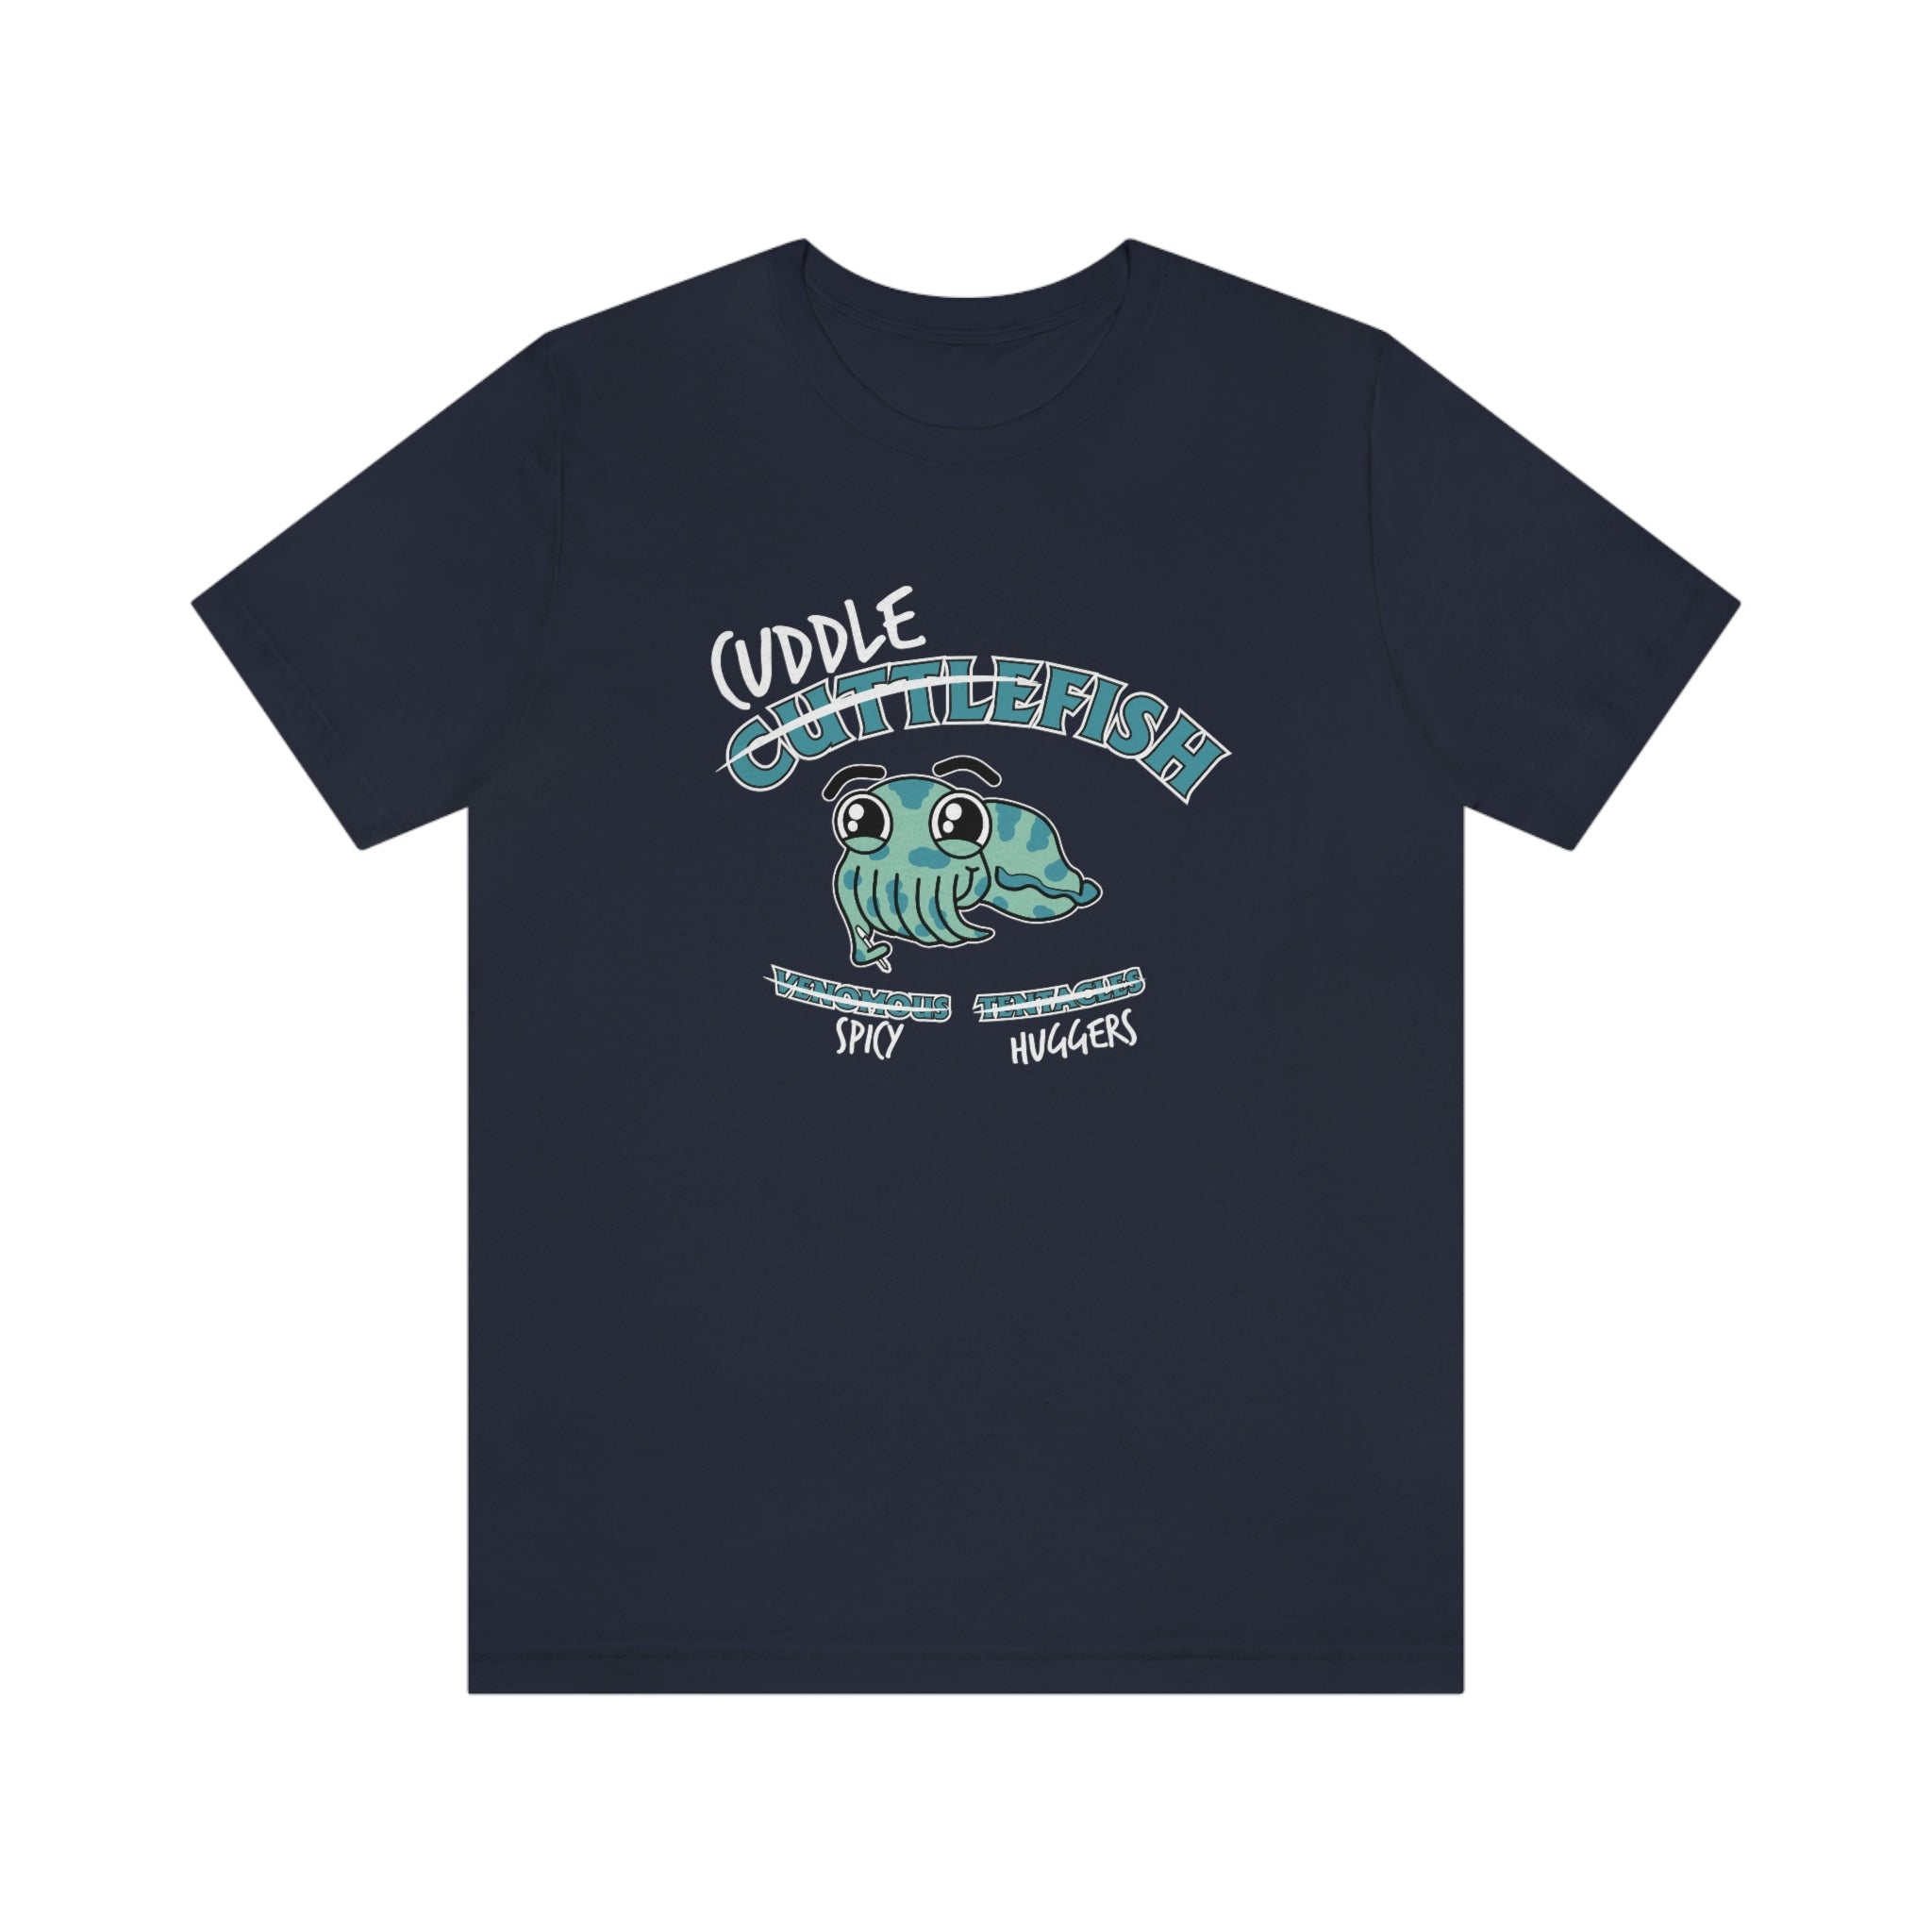 Cuddle Fish! : Unisex 100% Comfy Cotton, T-Shirt by Bella+Canvas